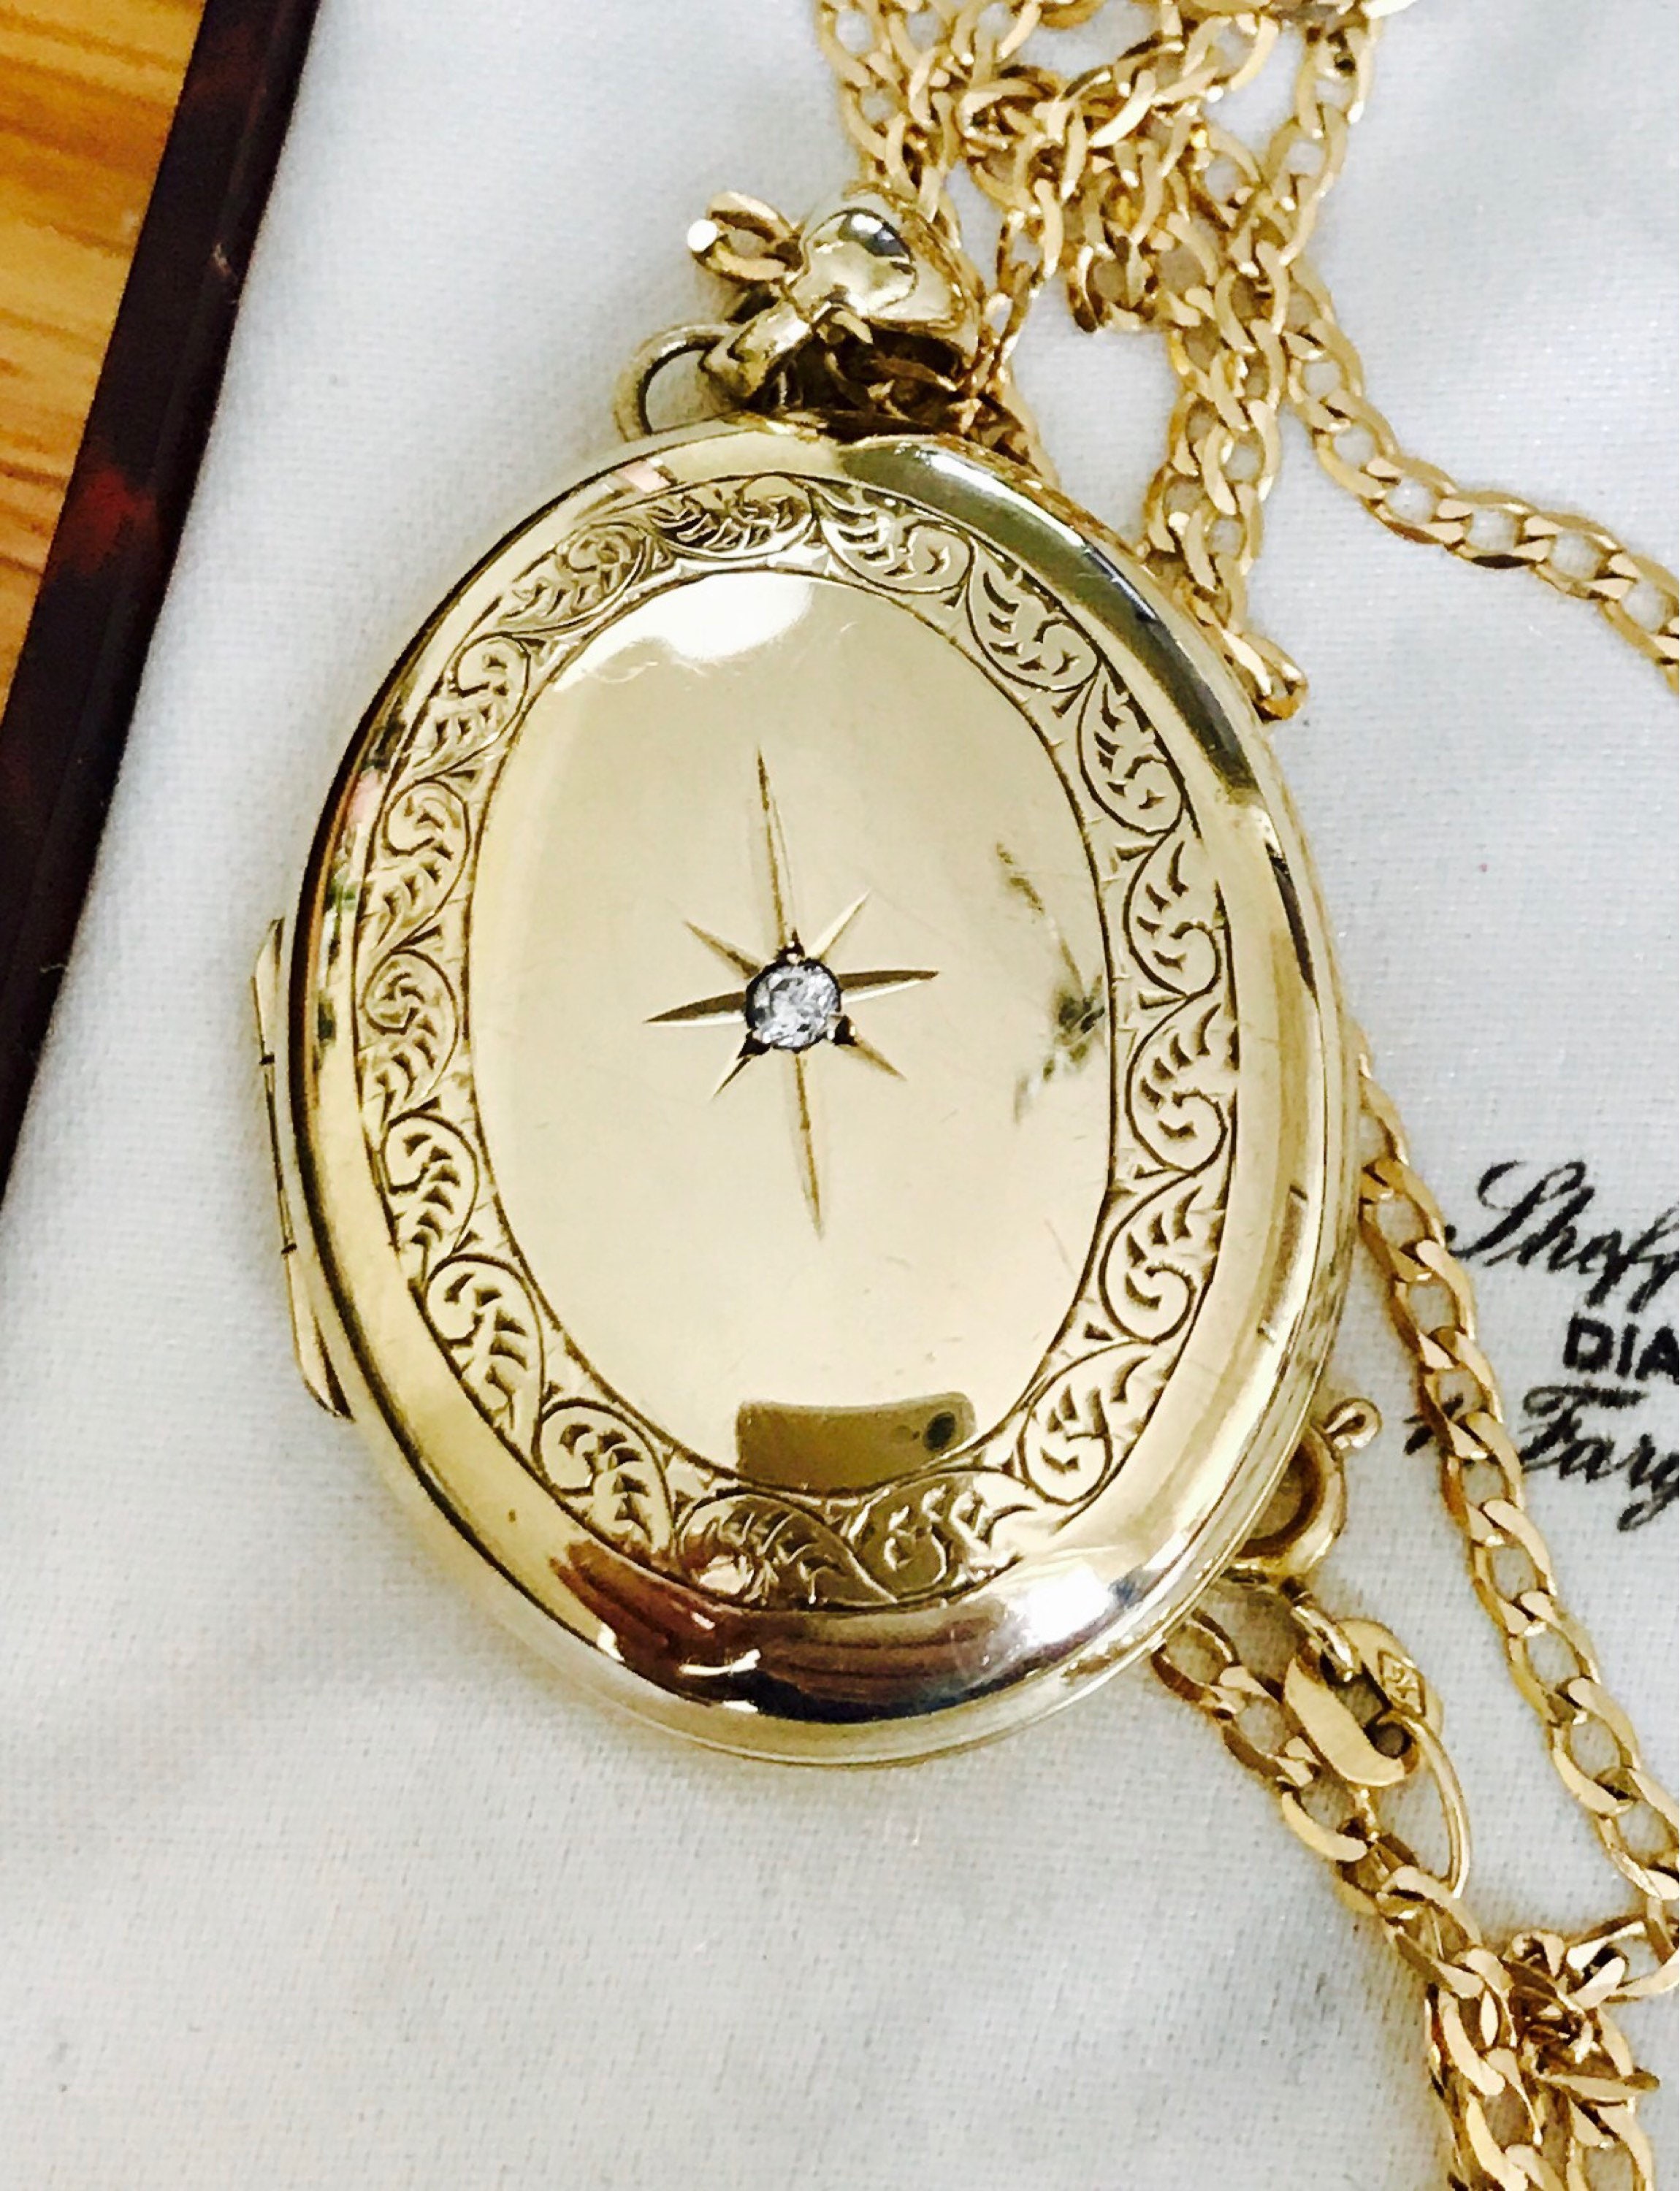 Beautiful heavy vintage solid 9ct gold diamond locket - fully hallmarked